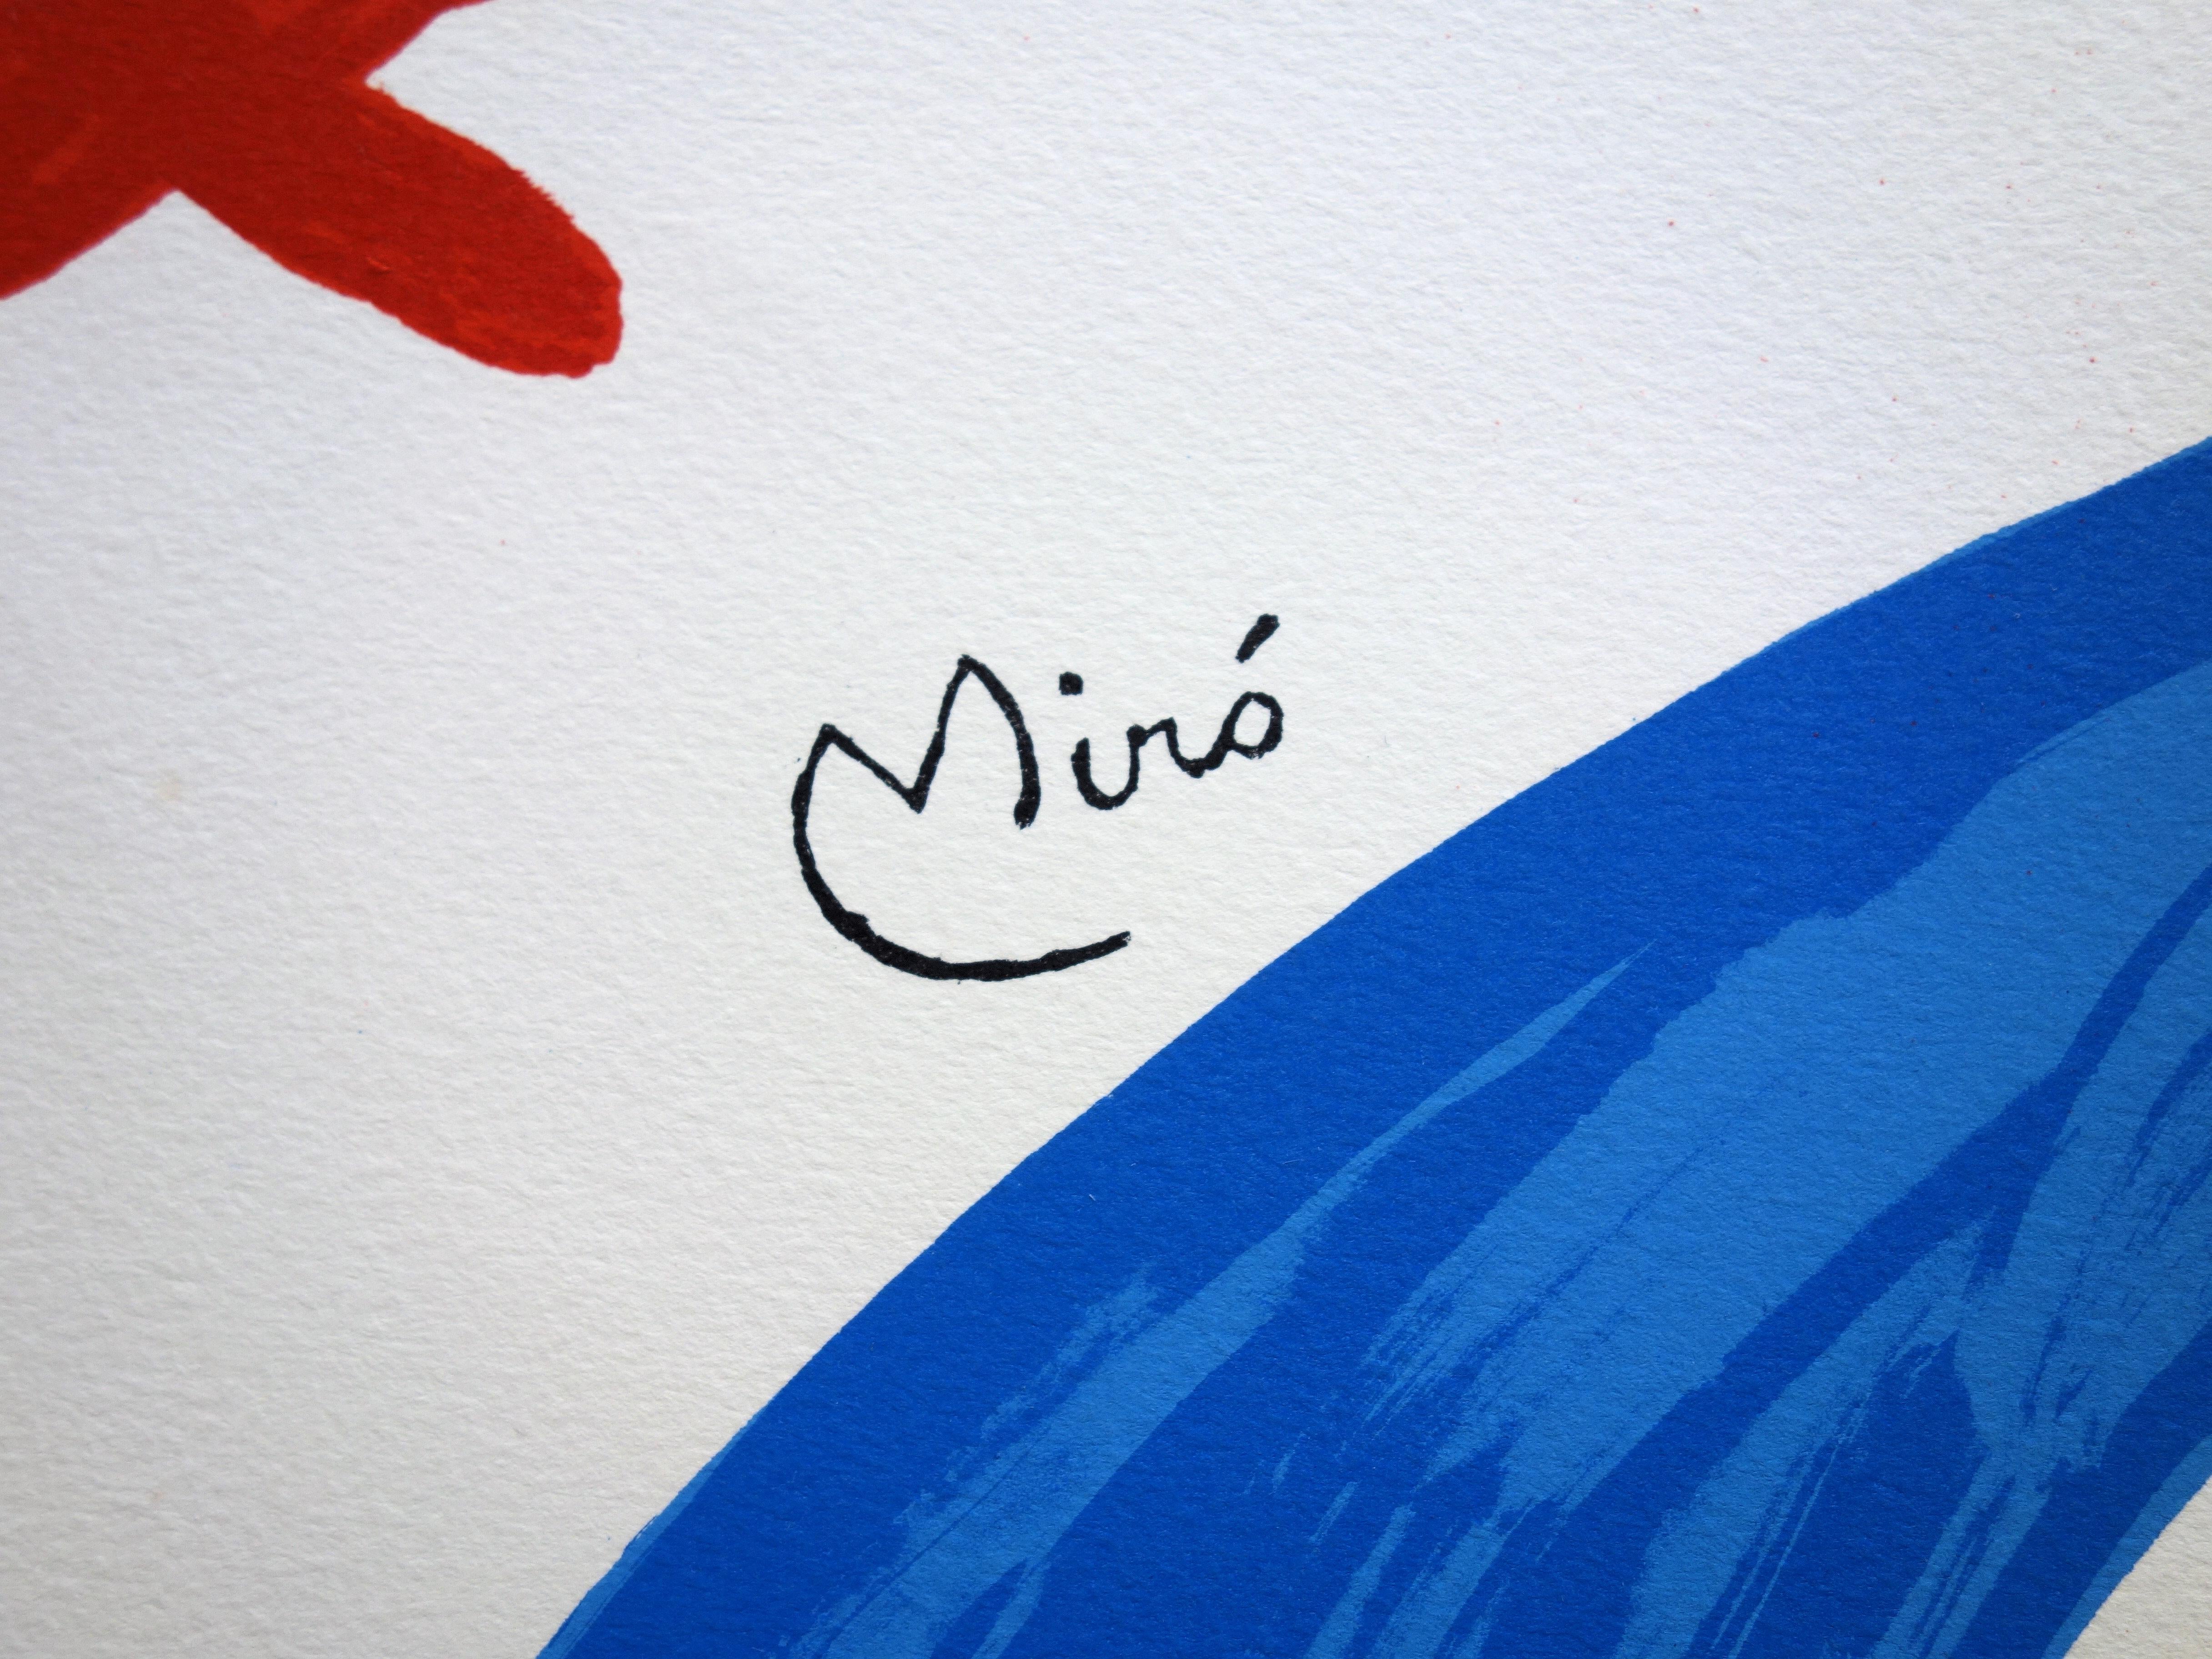 All the Perfumes - Original lithograph - 1973 - Print by Joan Miró